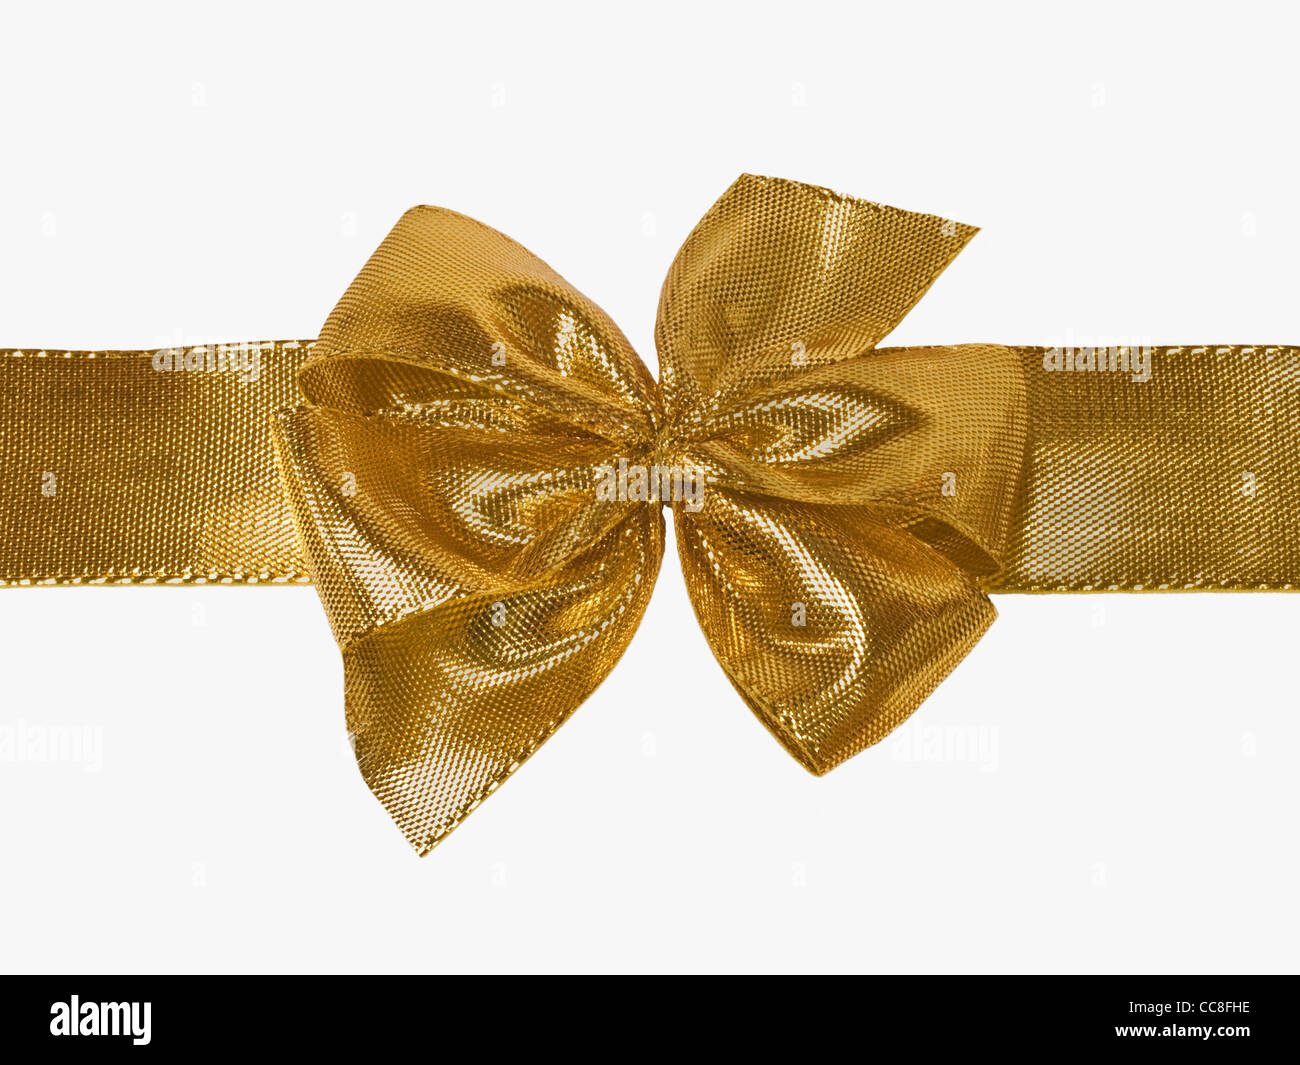 Detailansicht einer goldenen Schleife, waagerecht | Detail photo of a golden bow, horizontally Stock Photo